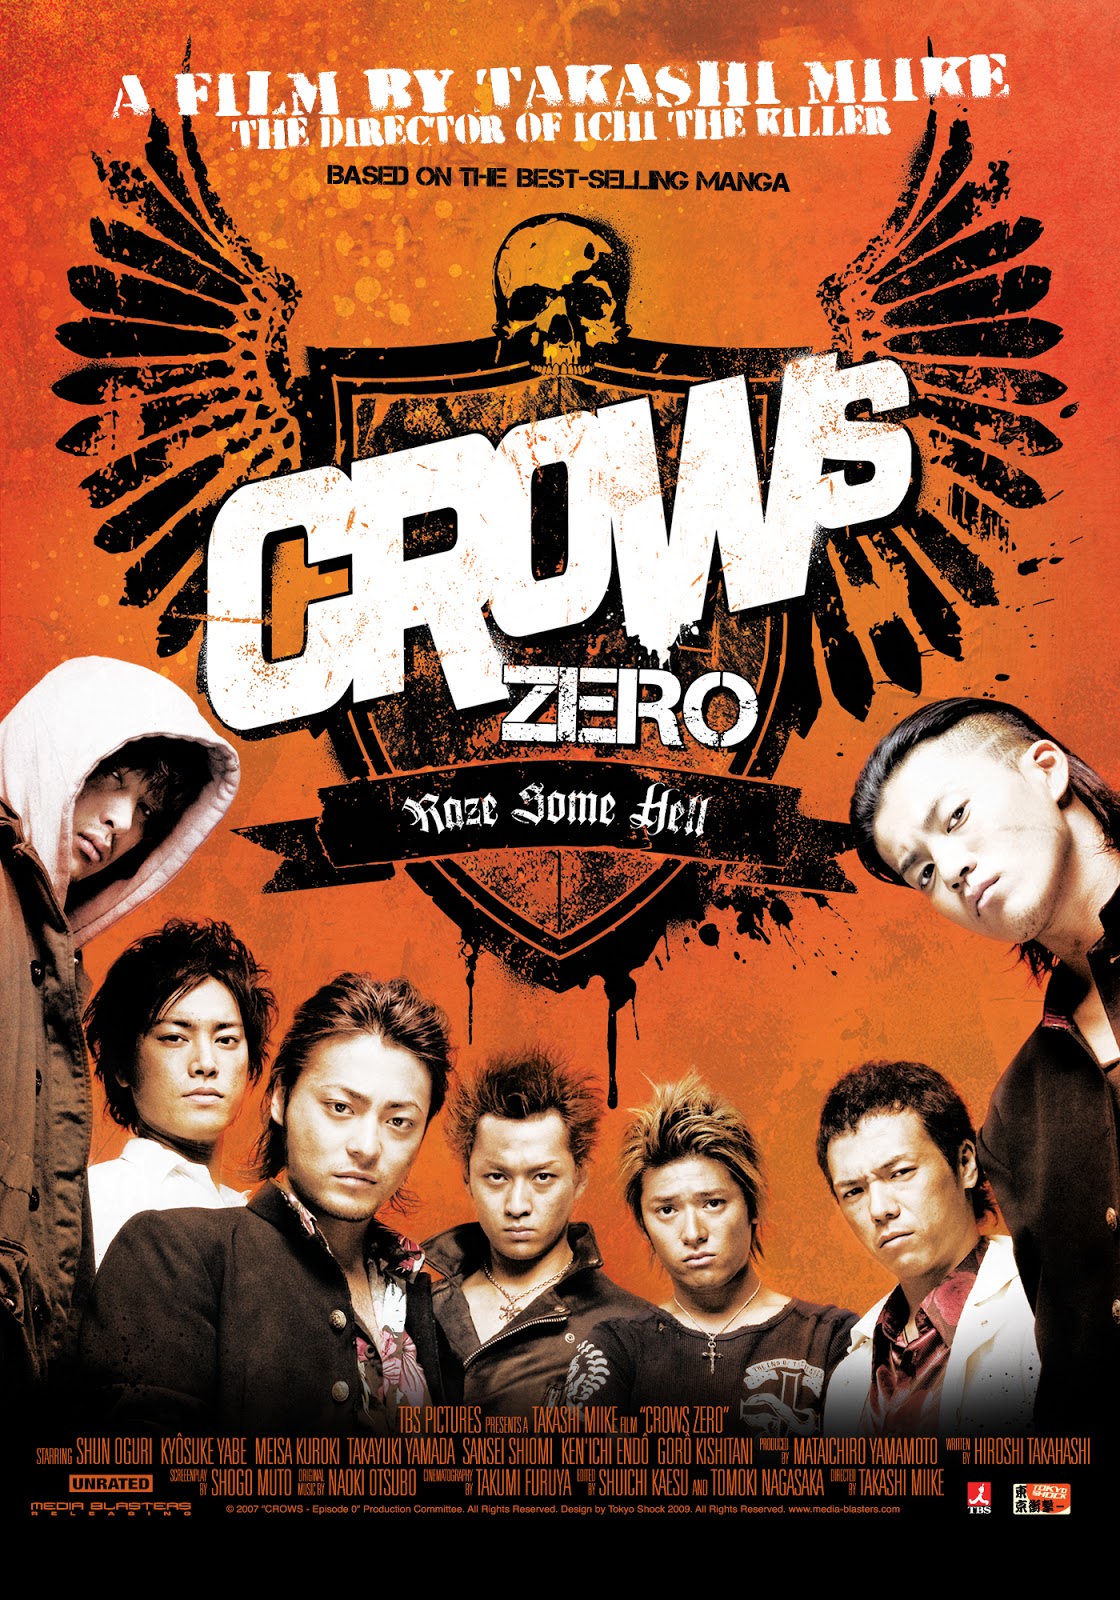 Download film crows zero 3 full movie subtitle indonesia mp4